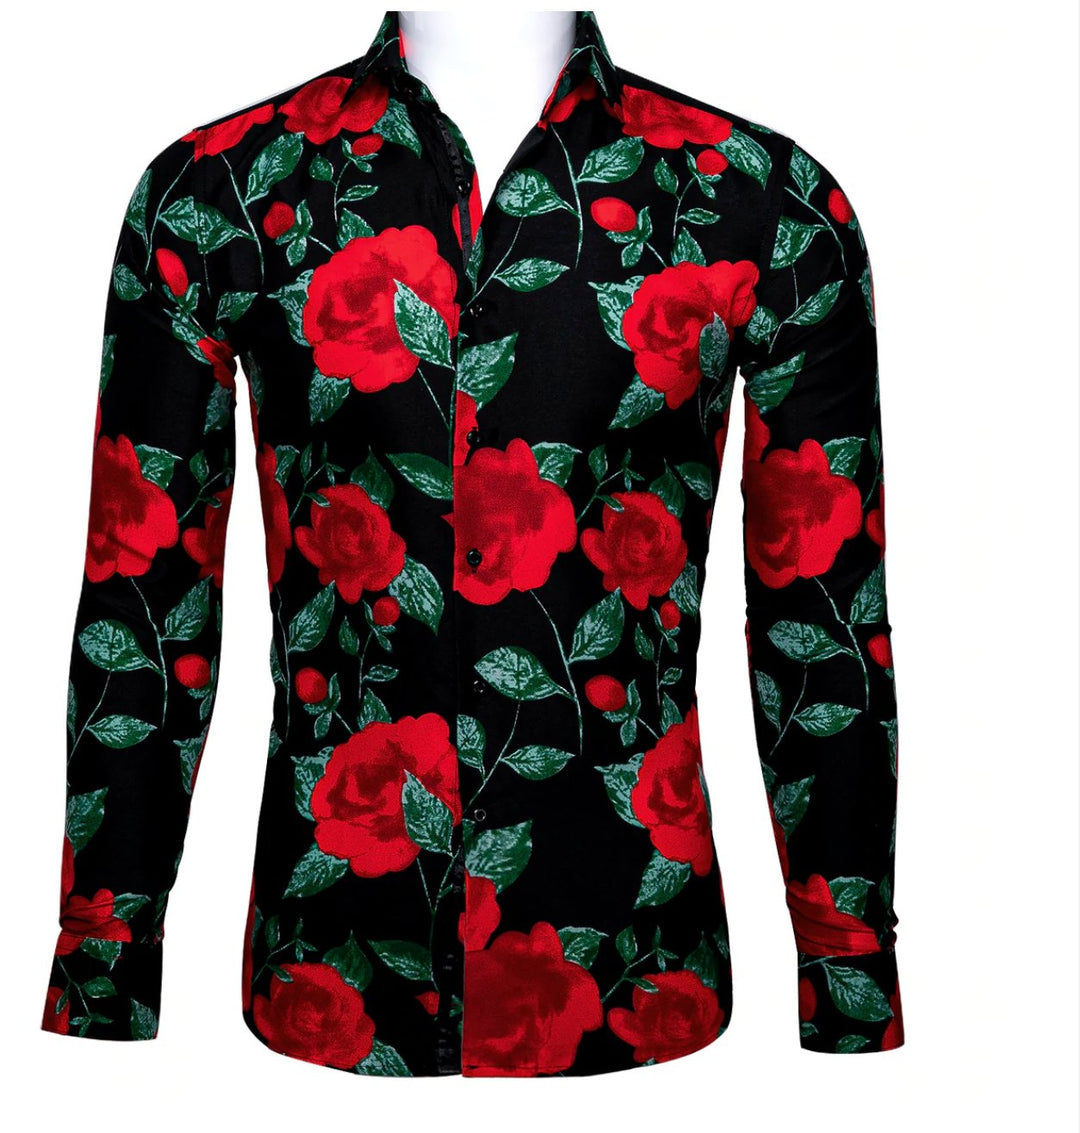 Novelty Black Red Green Floral Shirt.CY - 0111 - SimonVon Shop